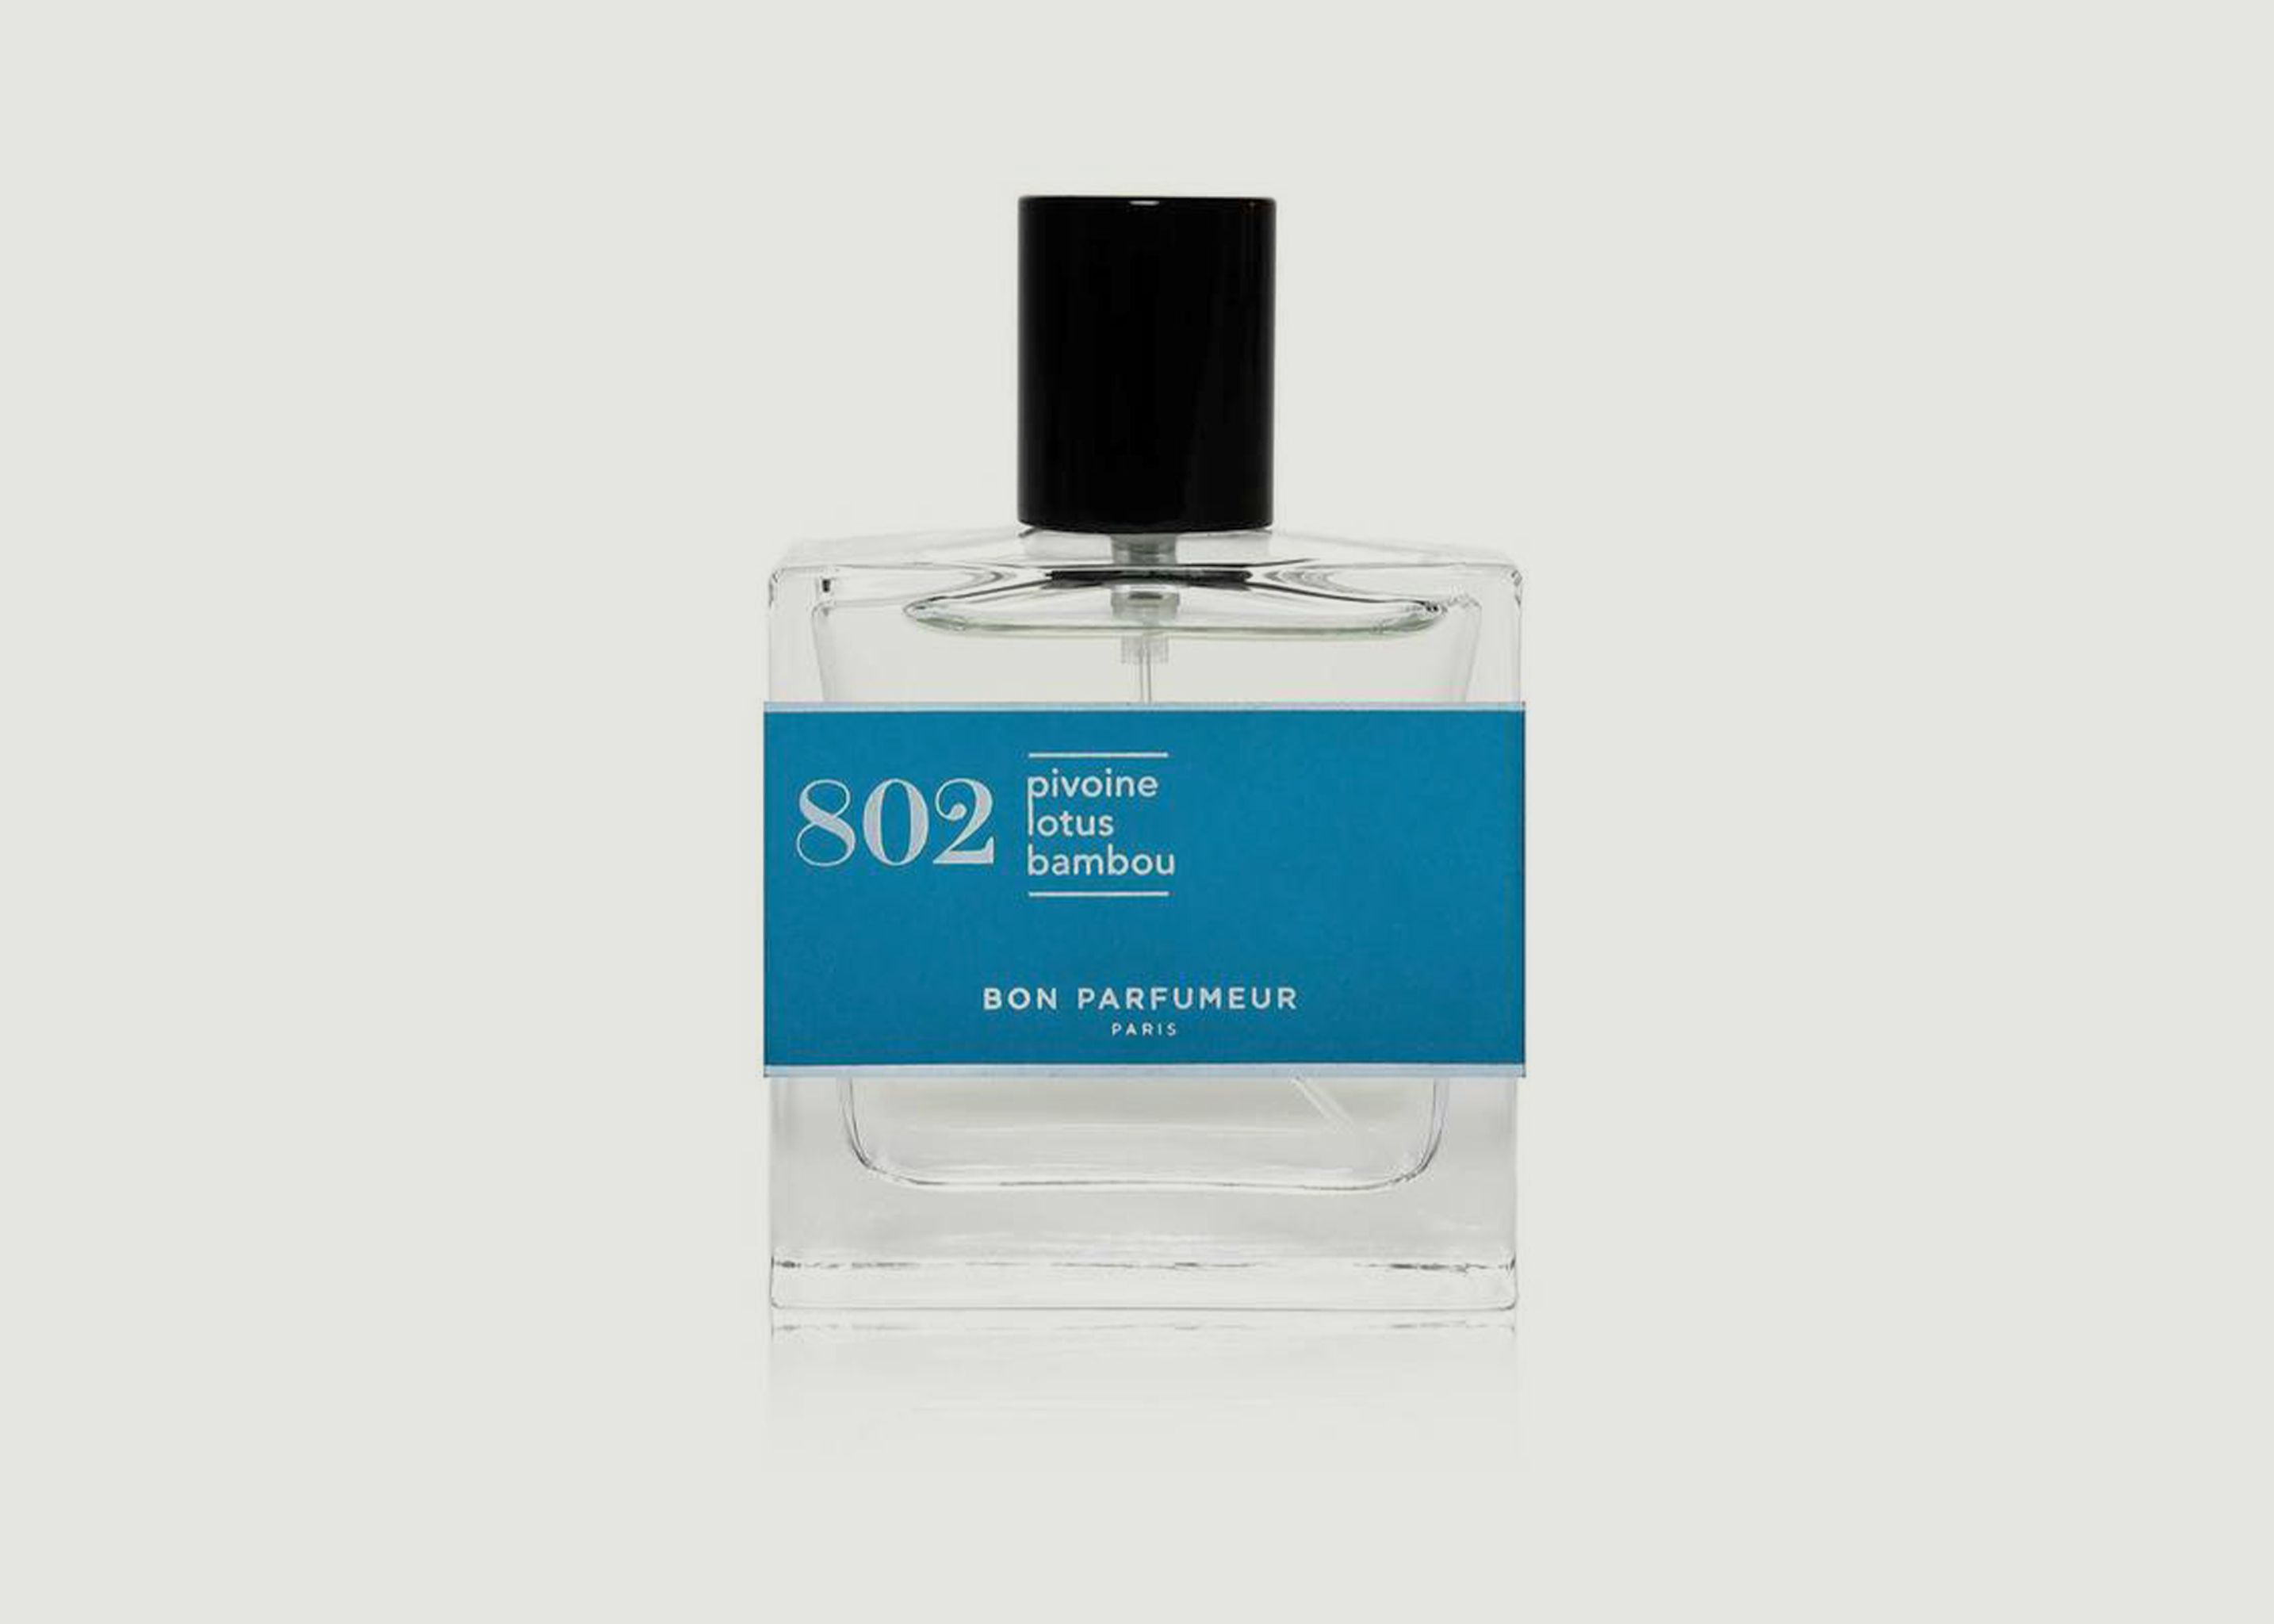 Eau de parfum 802, Peony, lotus, bamboo - Bon Parfumeur